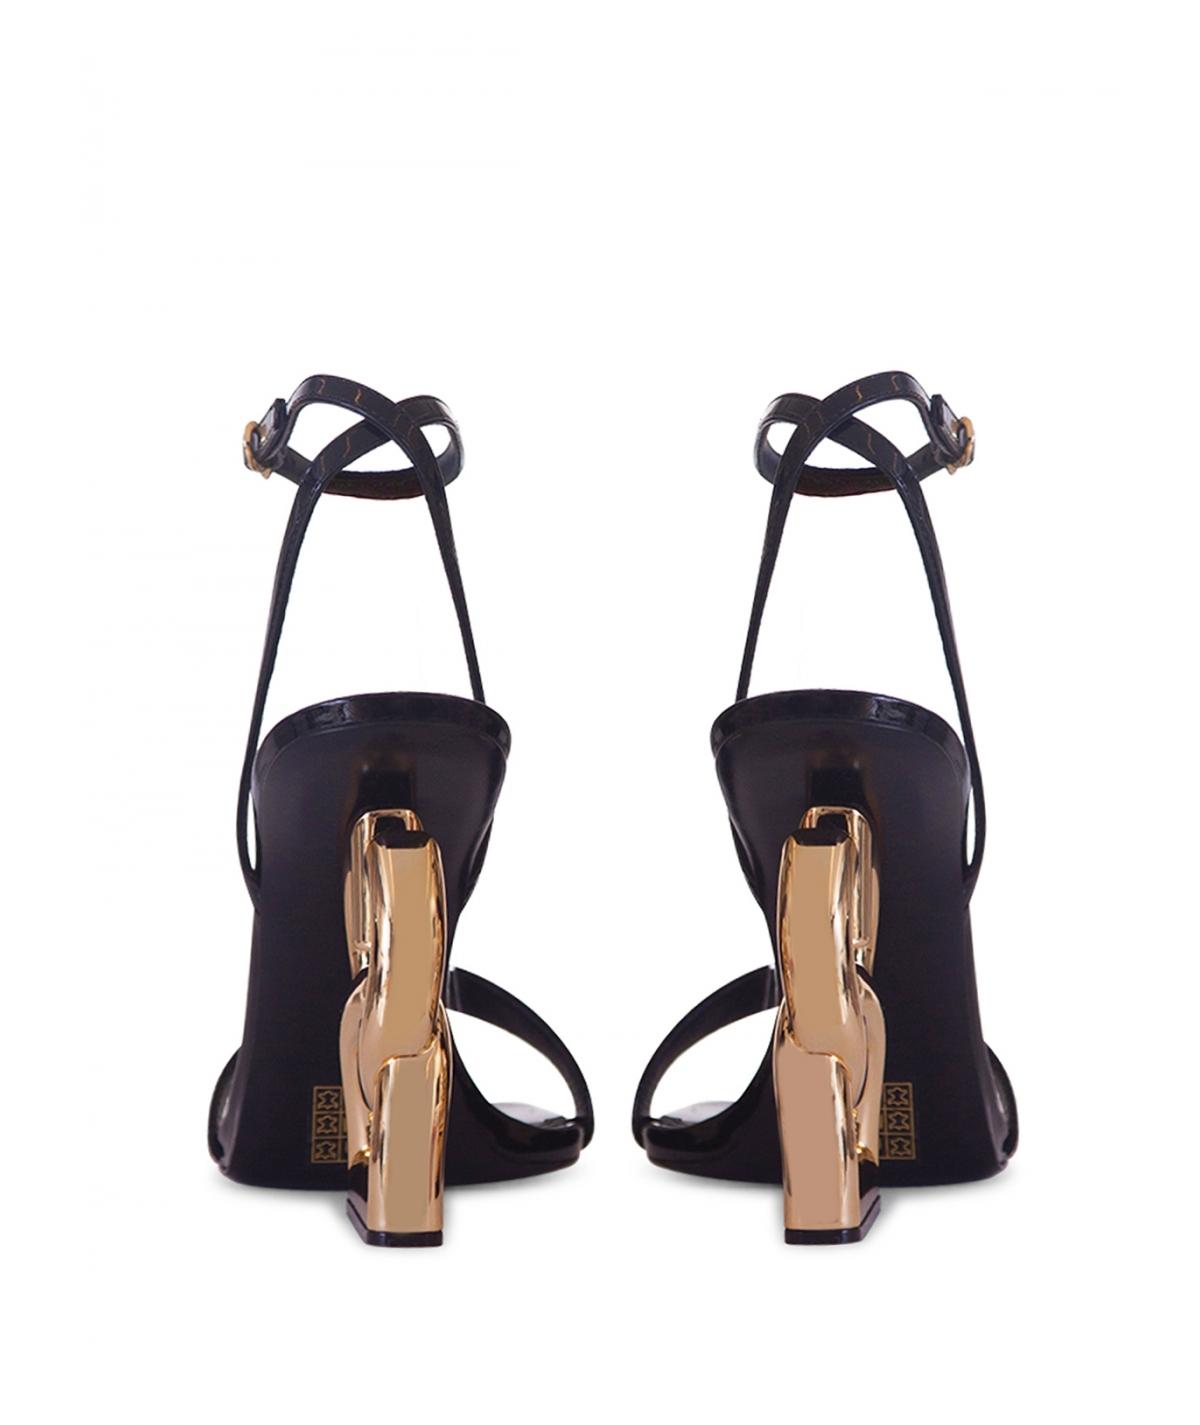 Dolce & Gabbana Leather Dg Pop Keira 105mm Sandals in Black - Lyst